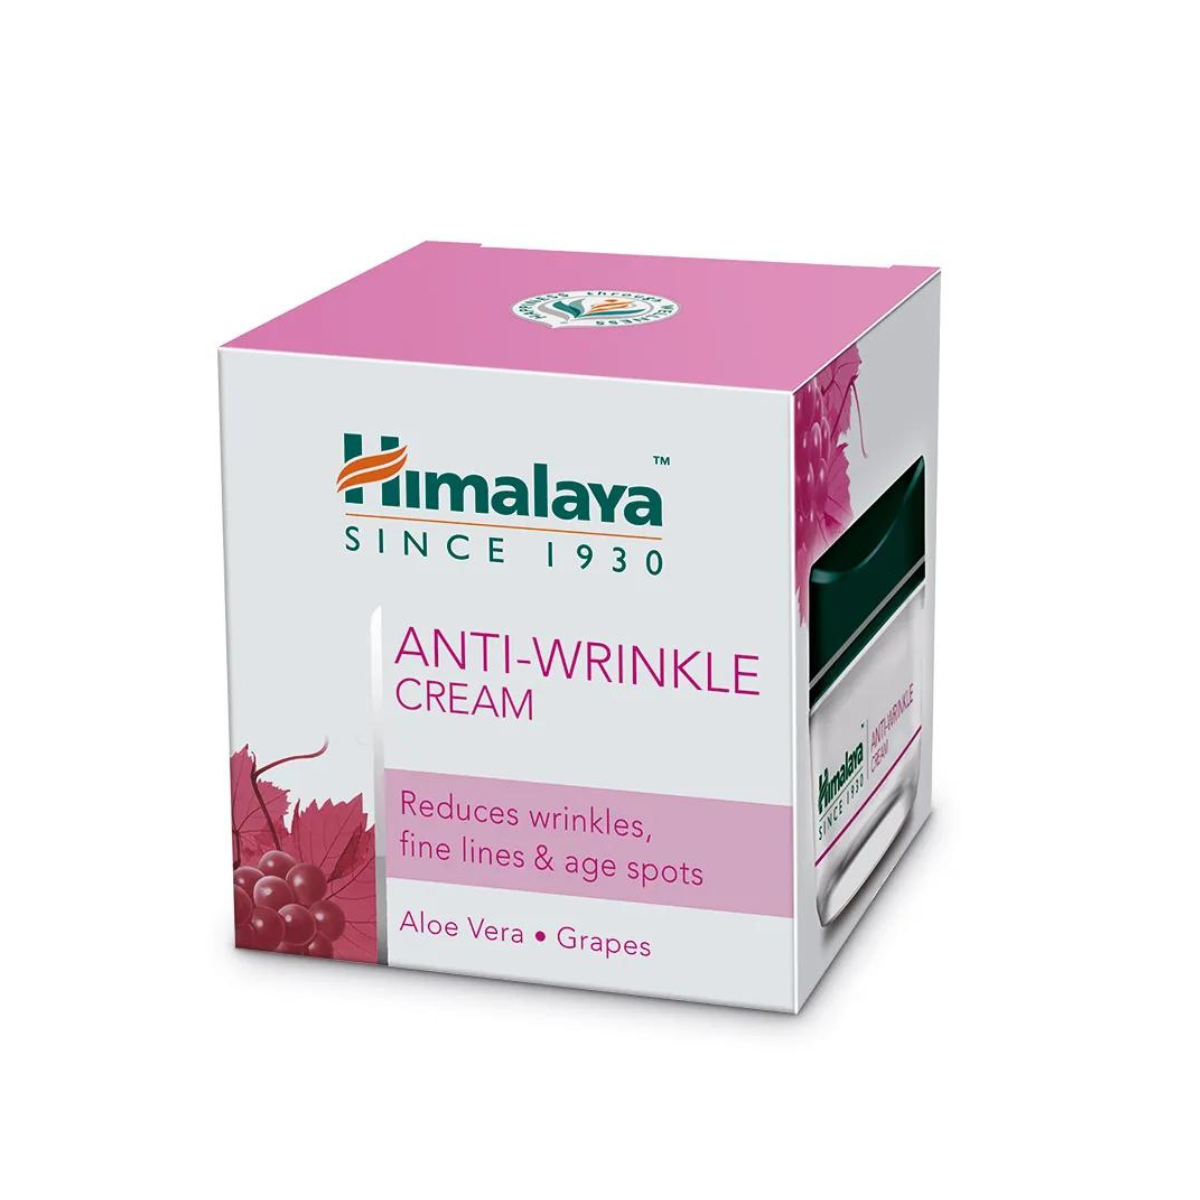 Himalaya Anti-Wrinkle Cream - Reduces Wrinkles, Fine Lines & Age Spots - Aloe Vera + Grapes - 50g